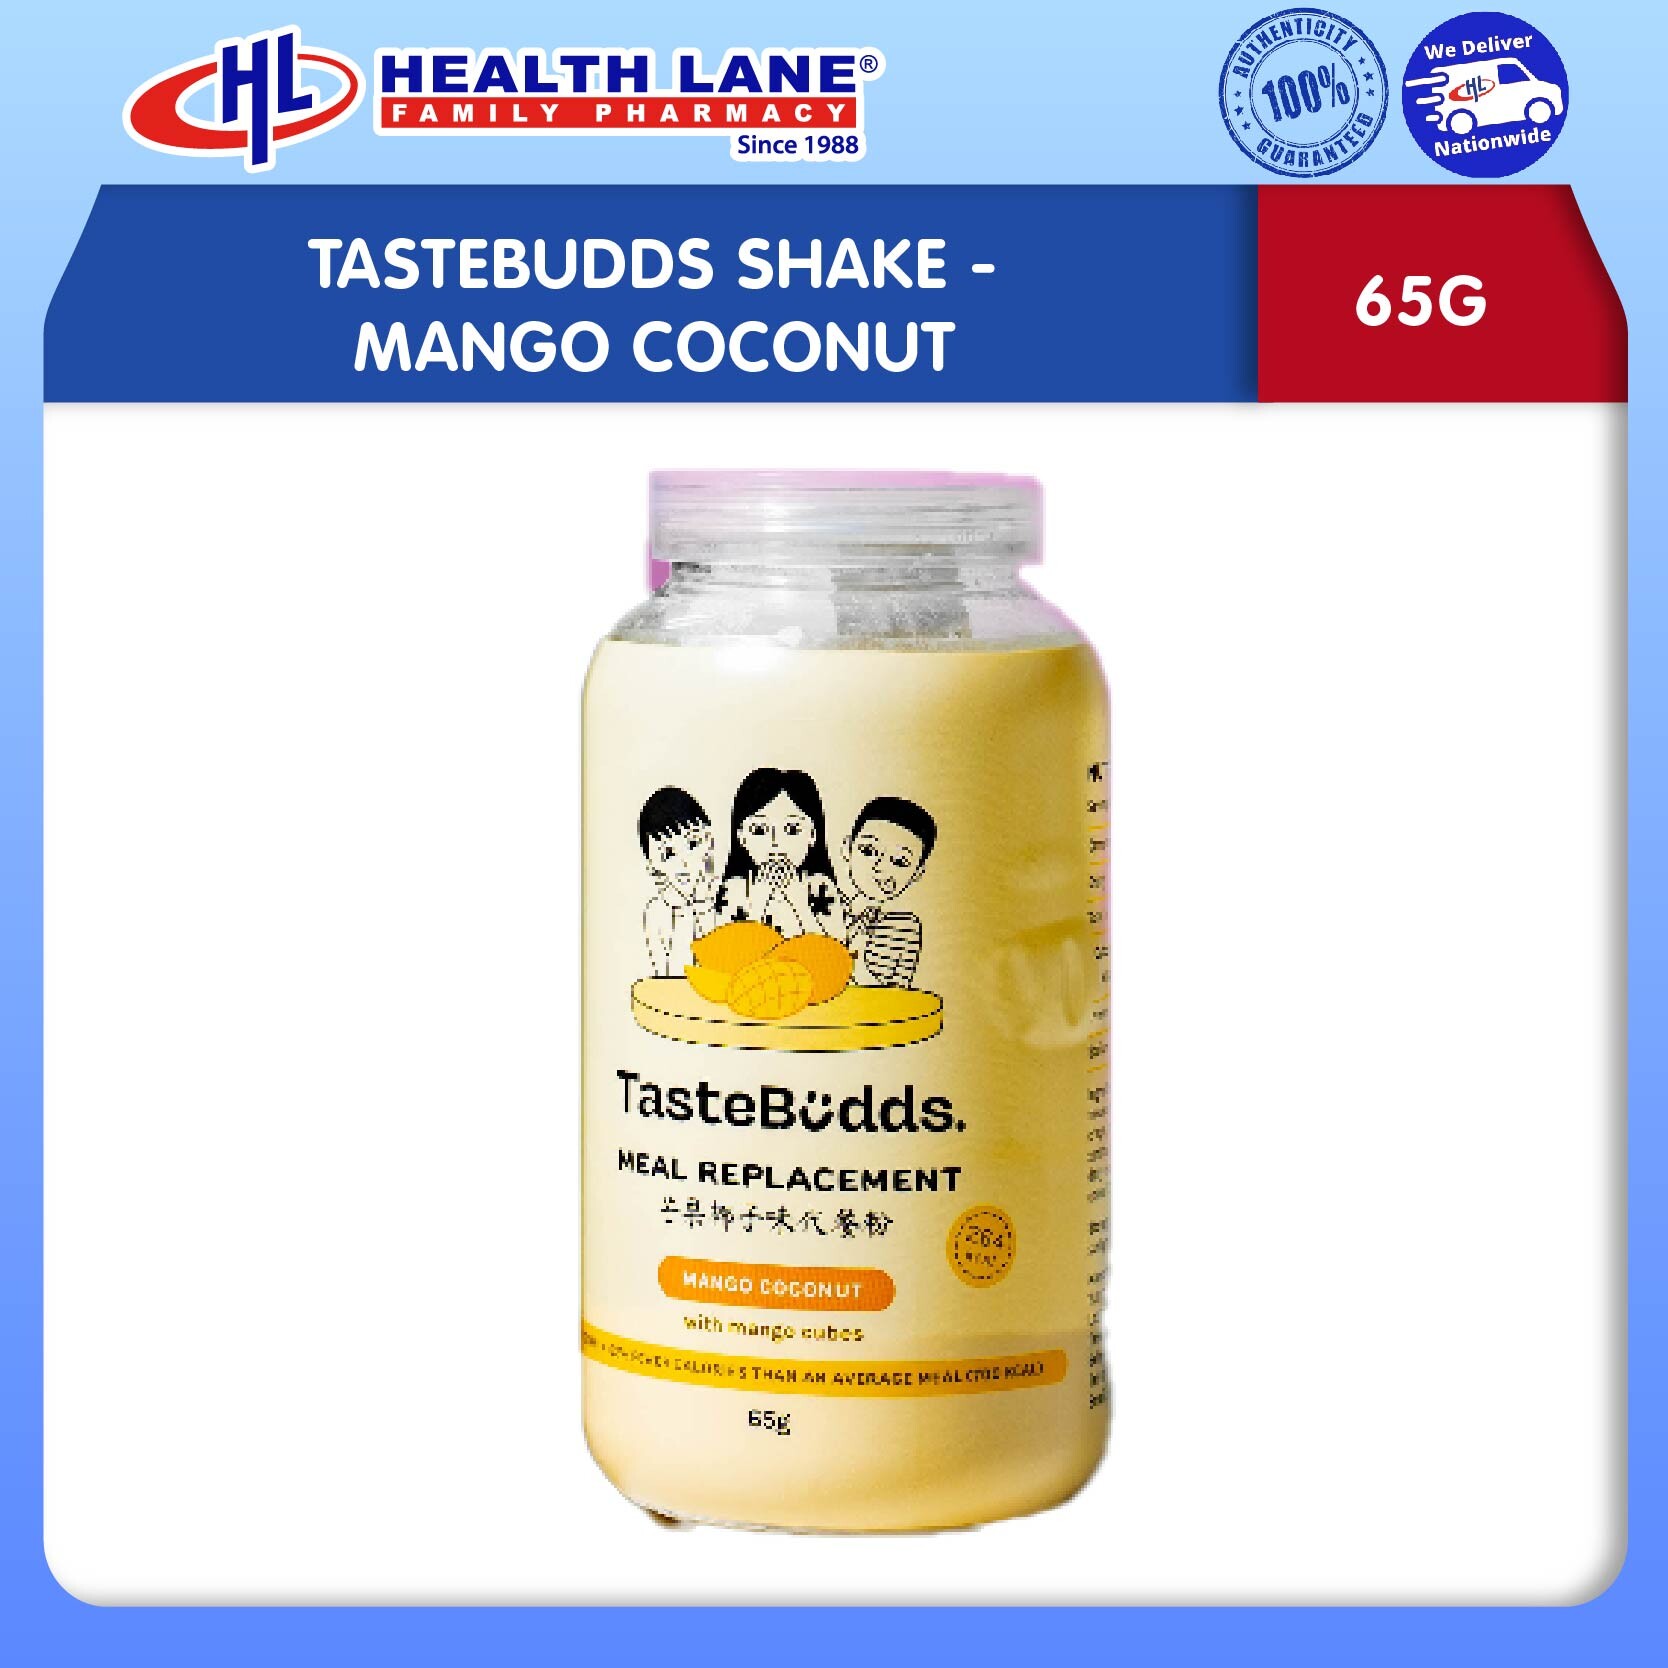 TASTEBUDDS SHAKE - MANGO COCONUT (65G)